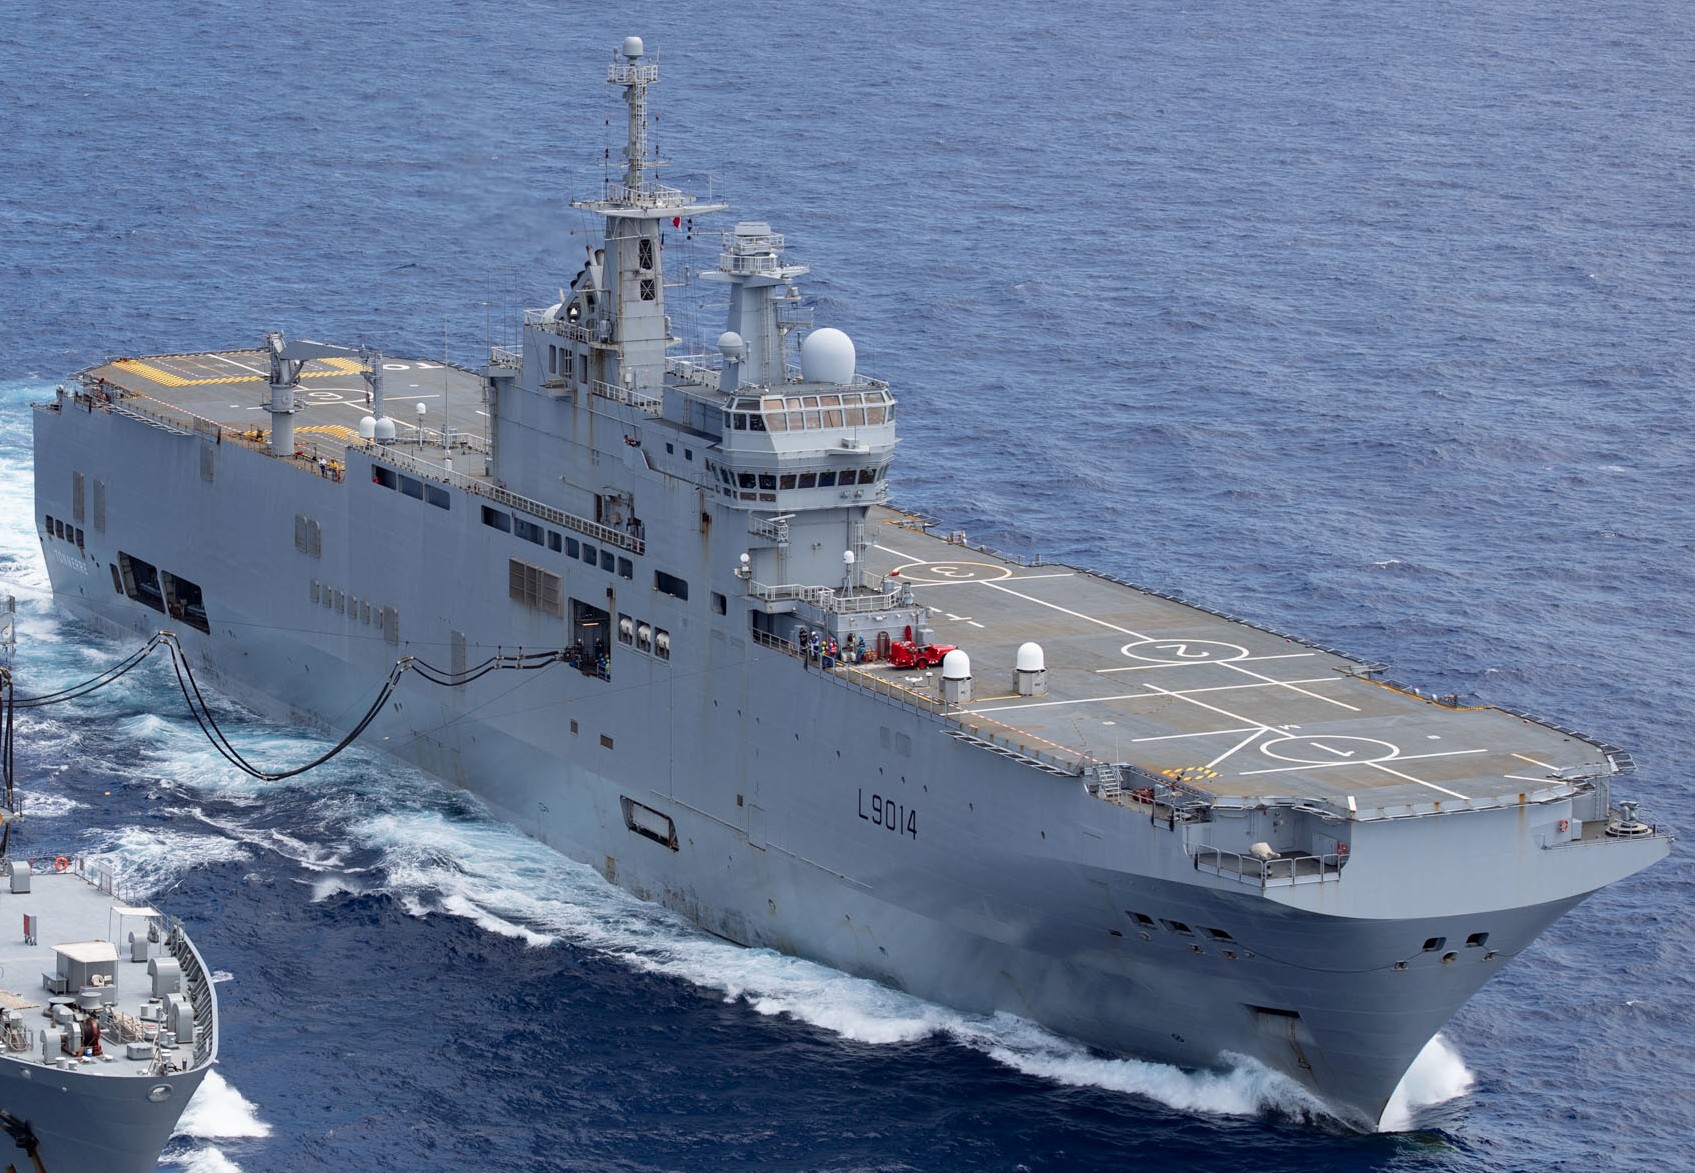 l-9014 fs tonnere mistral class amphibious assault command ship bpc french navy marine nationale 29